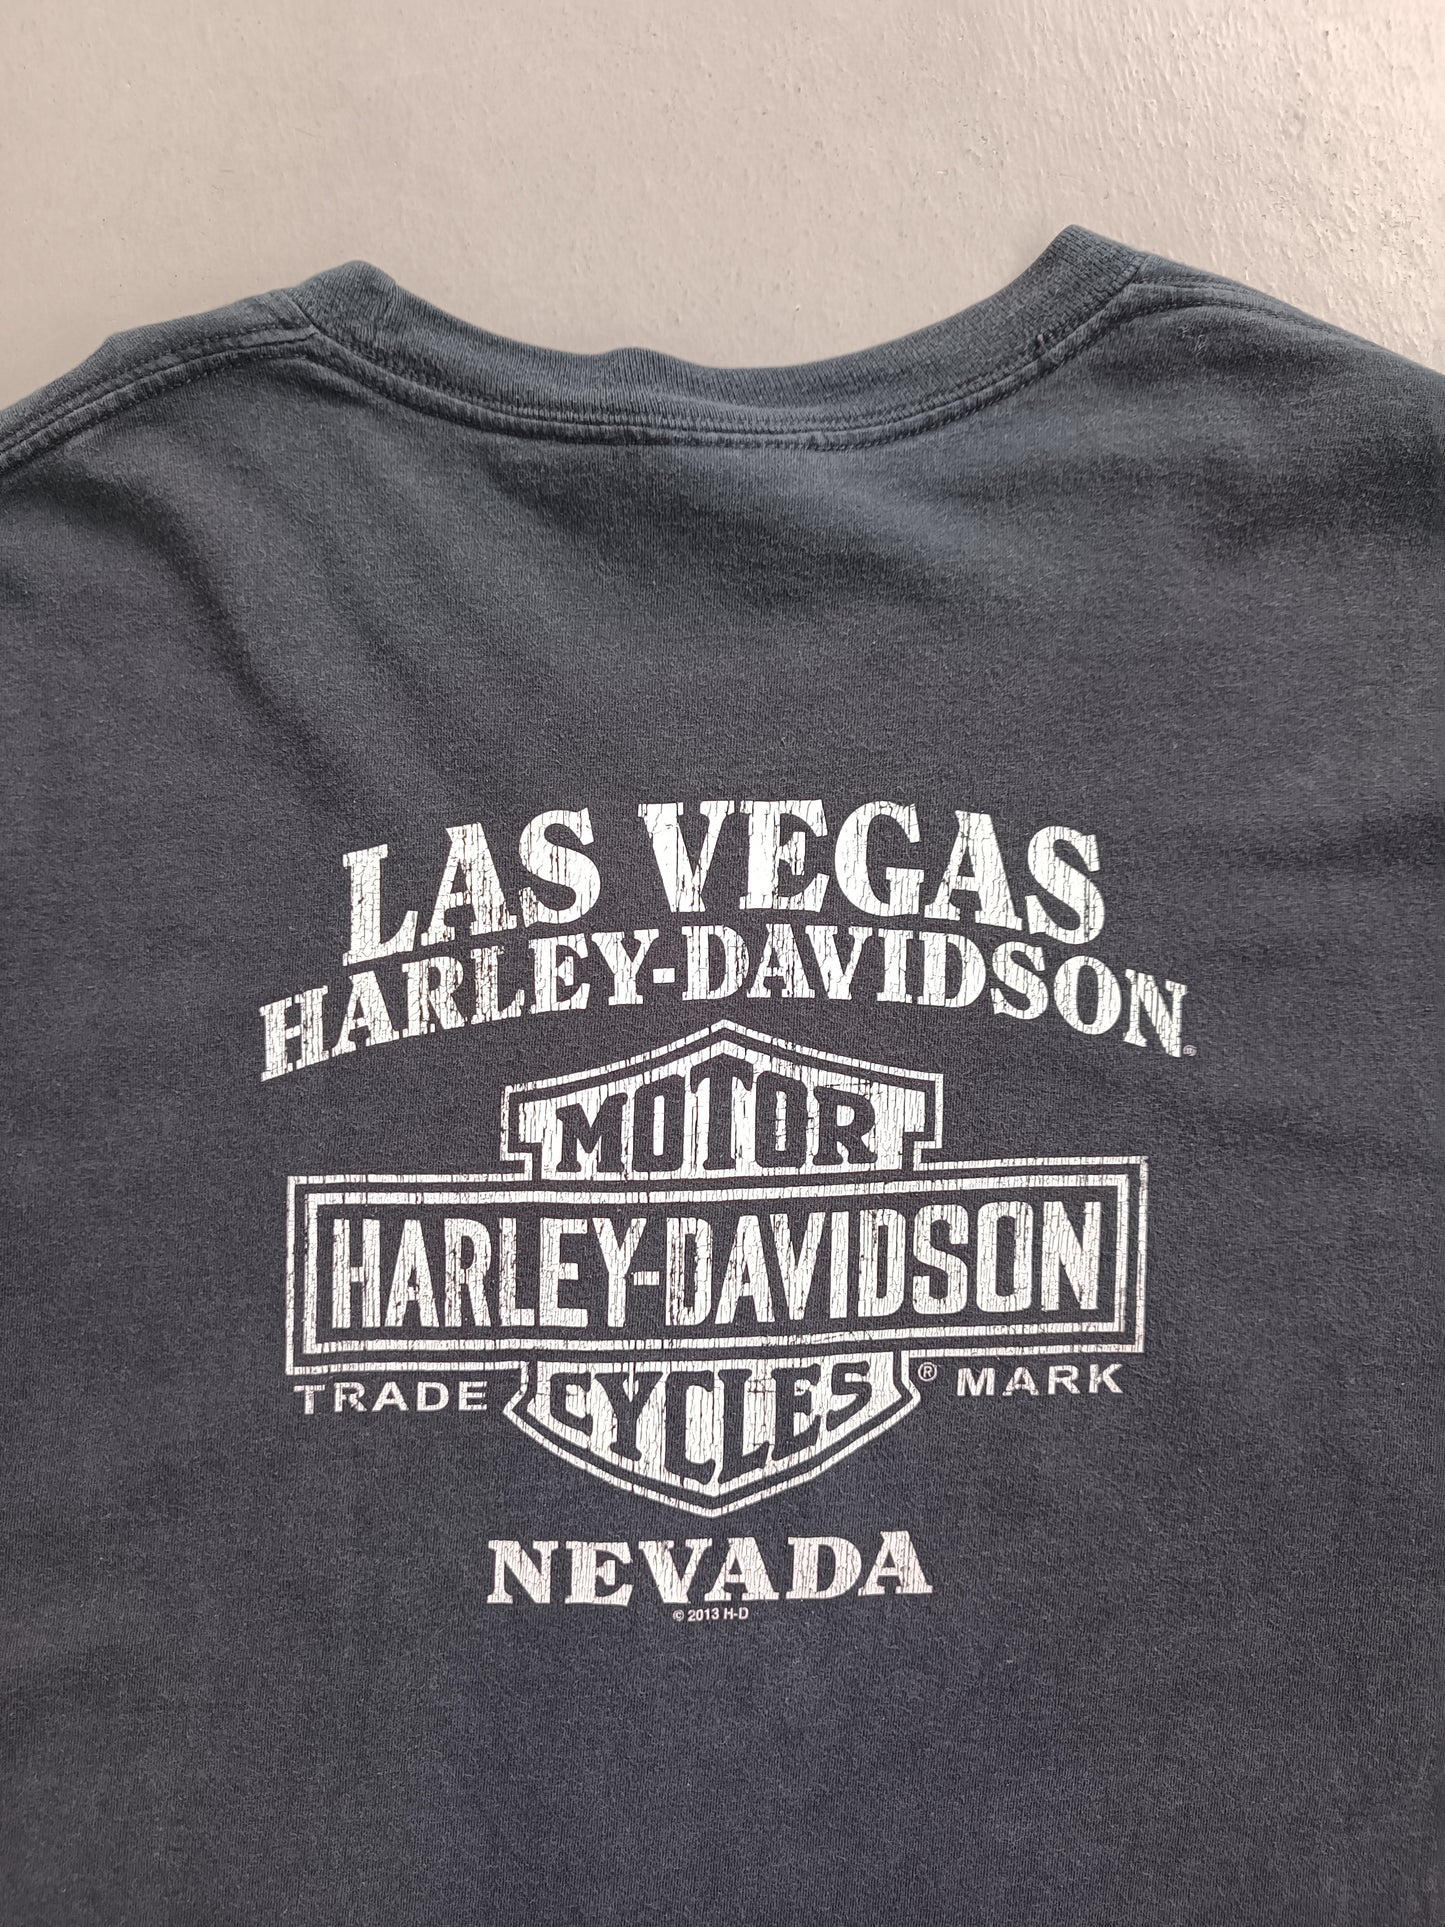 Harley Davidson Las Vegas - 2XL